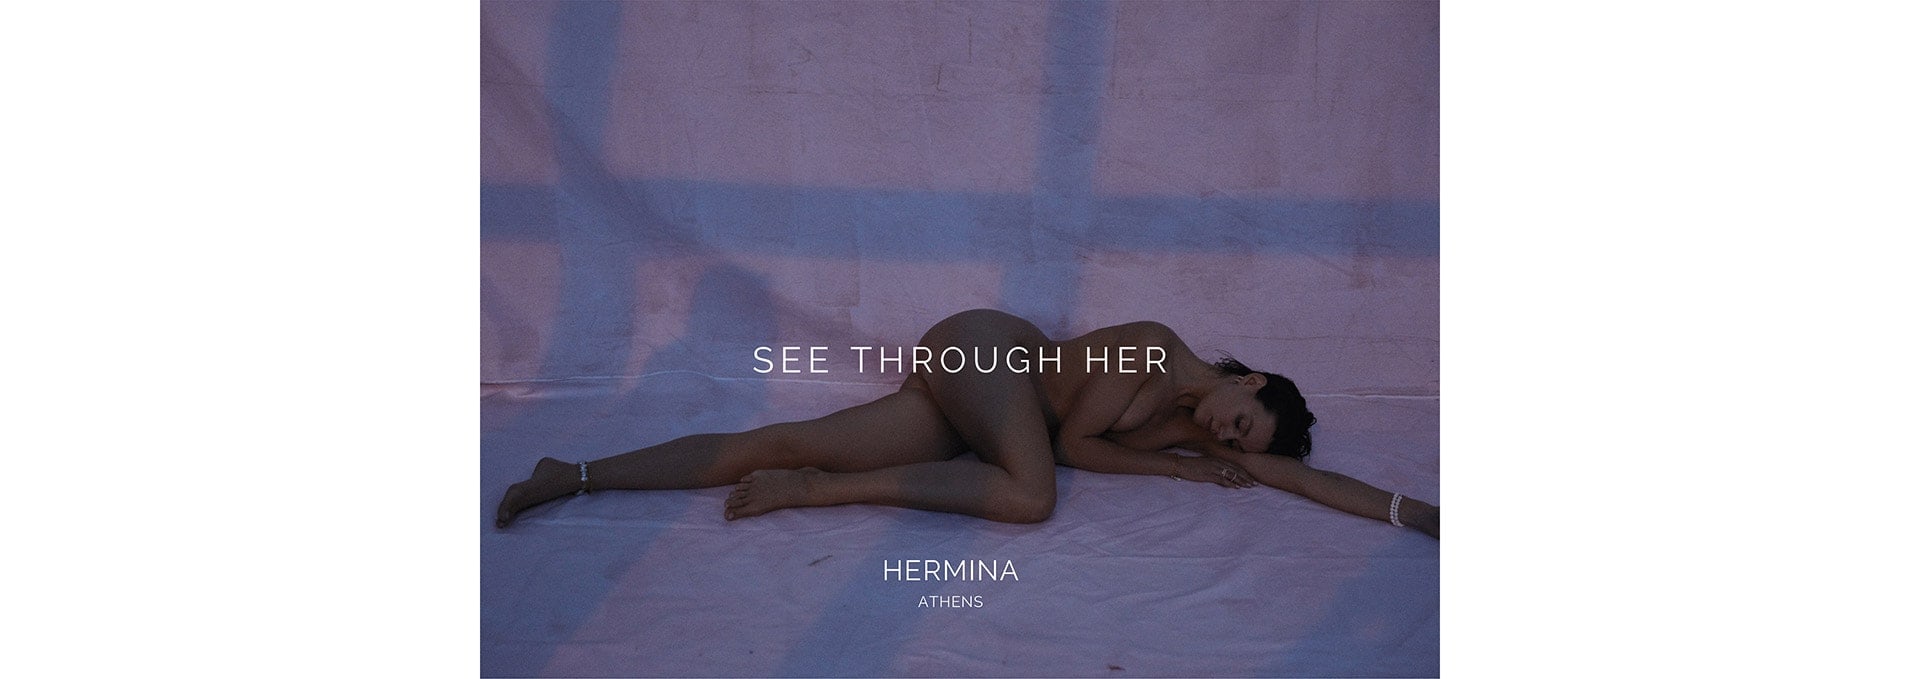 HERMINA ATHENS See Through Her